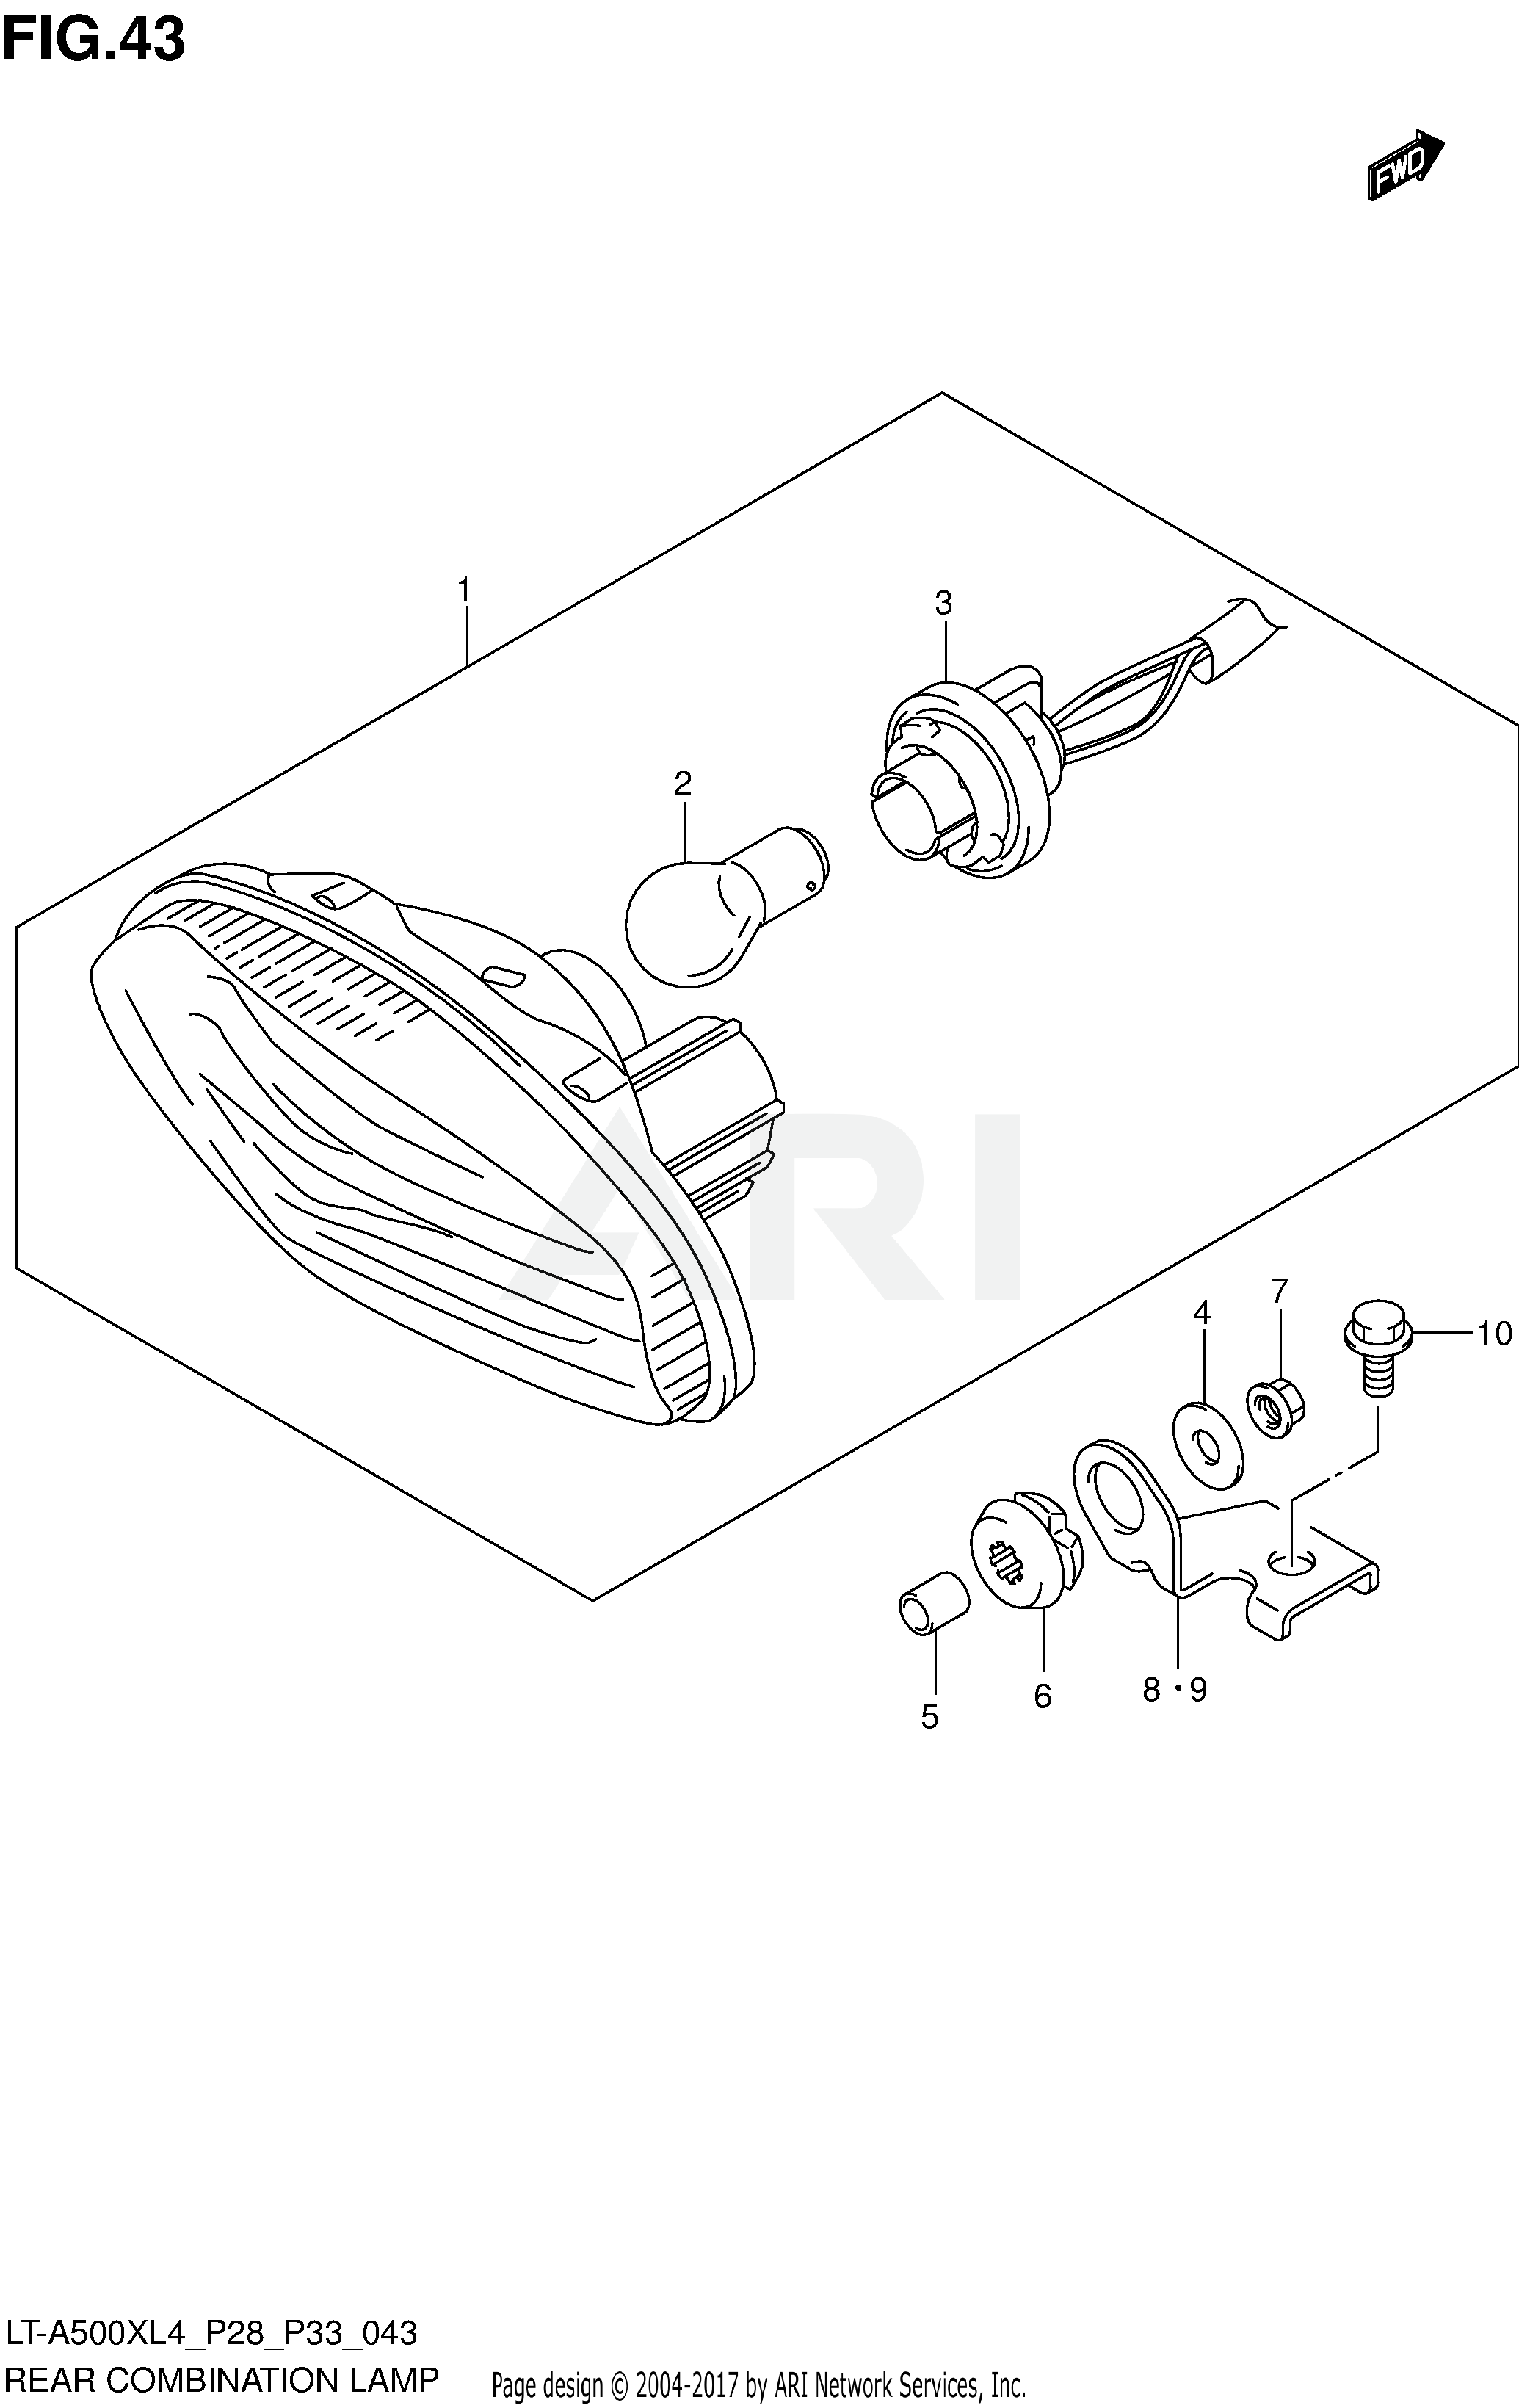 REAR COMBINATION LAMP (LT-A500XL4 P33)